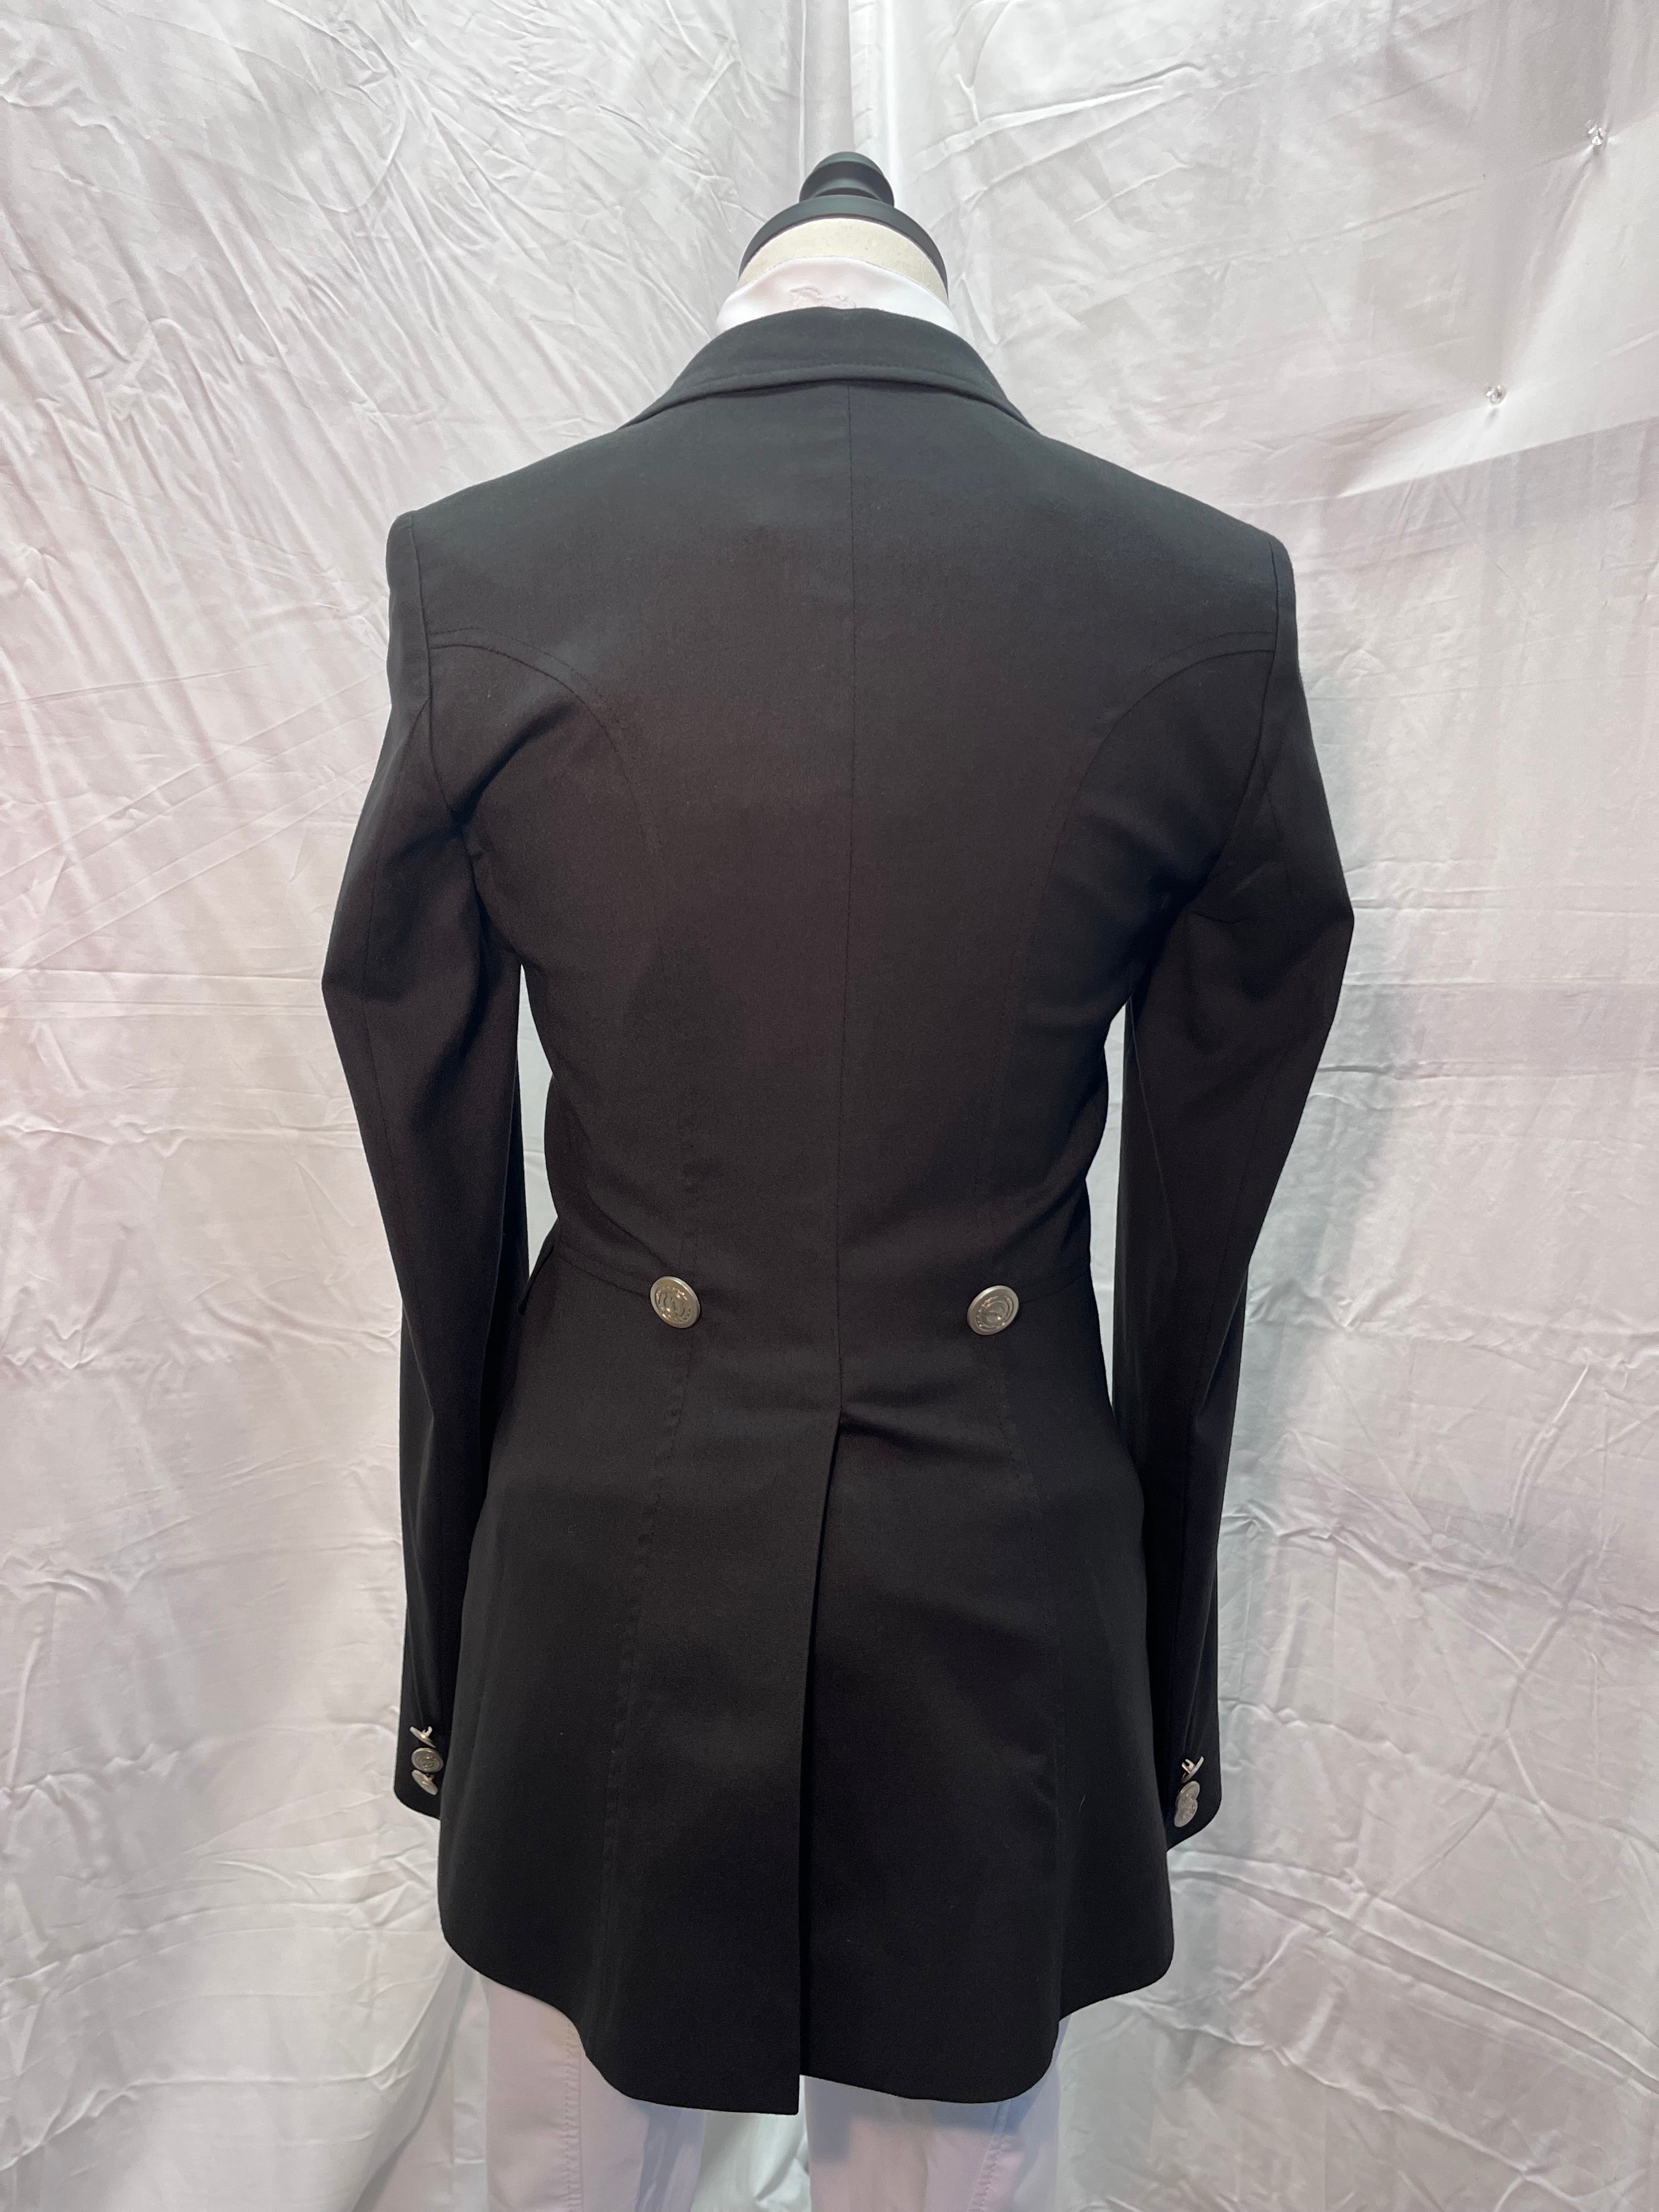 Romfh Featherlite Dressage Coat 8 Regular